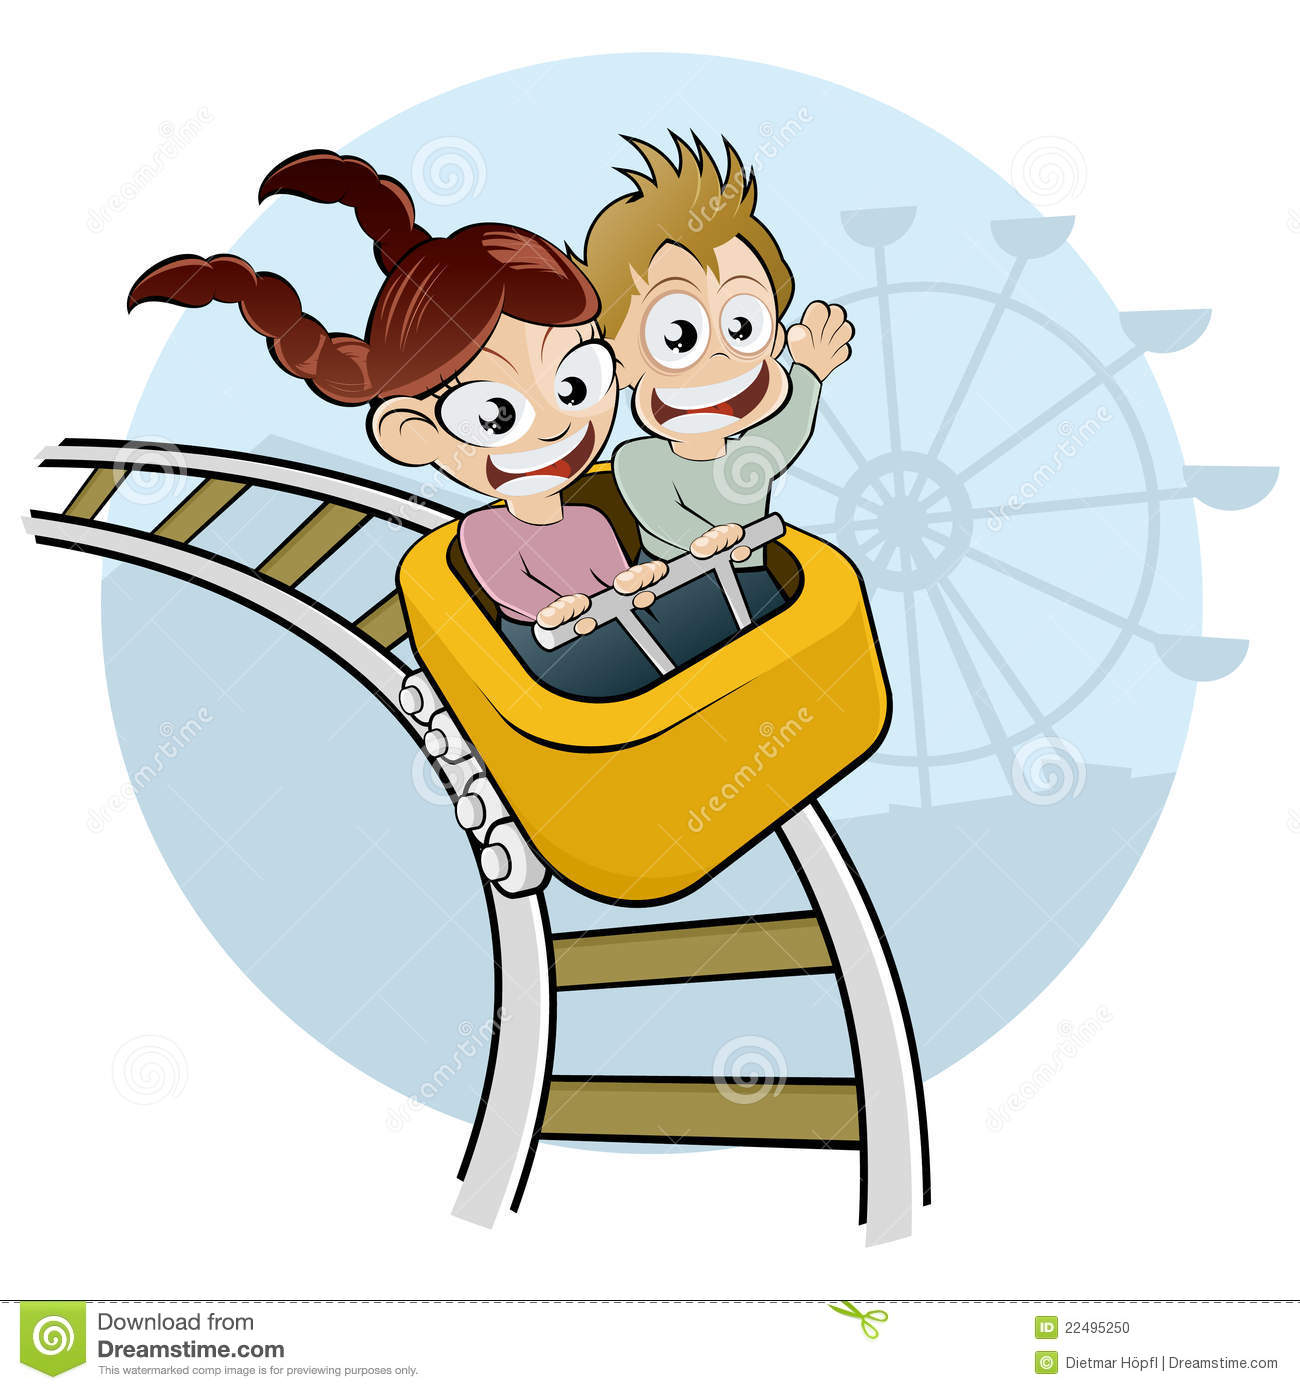 Cartoon Of Two Screaming Kids Having Fun On A Roller Coaster